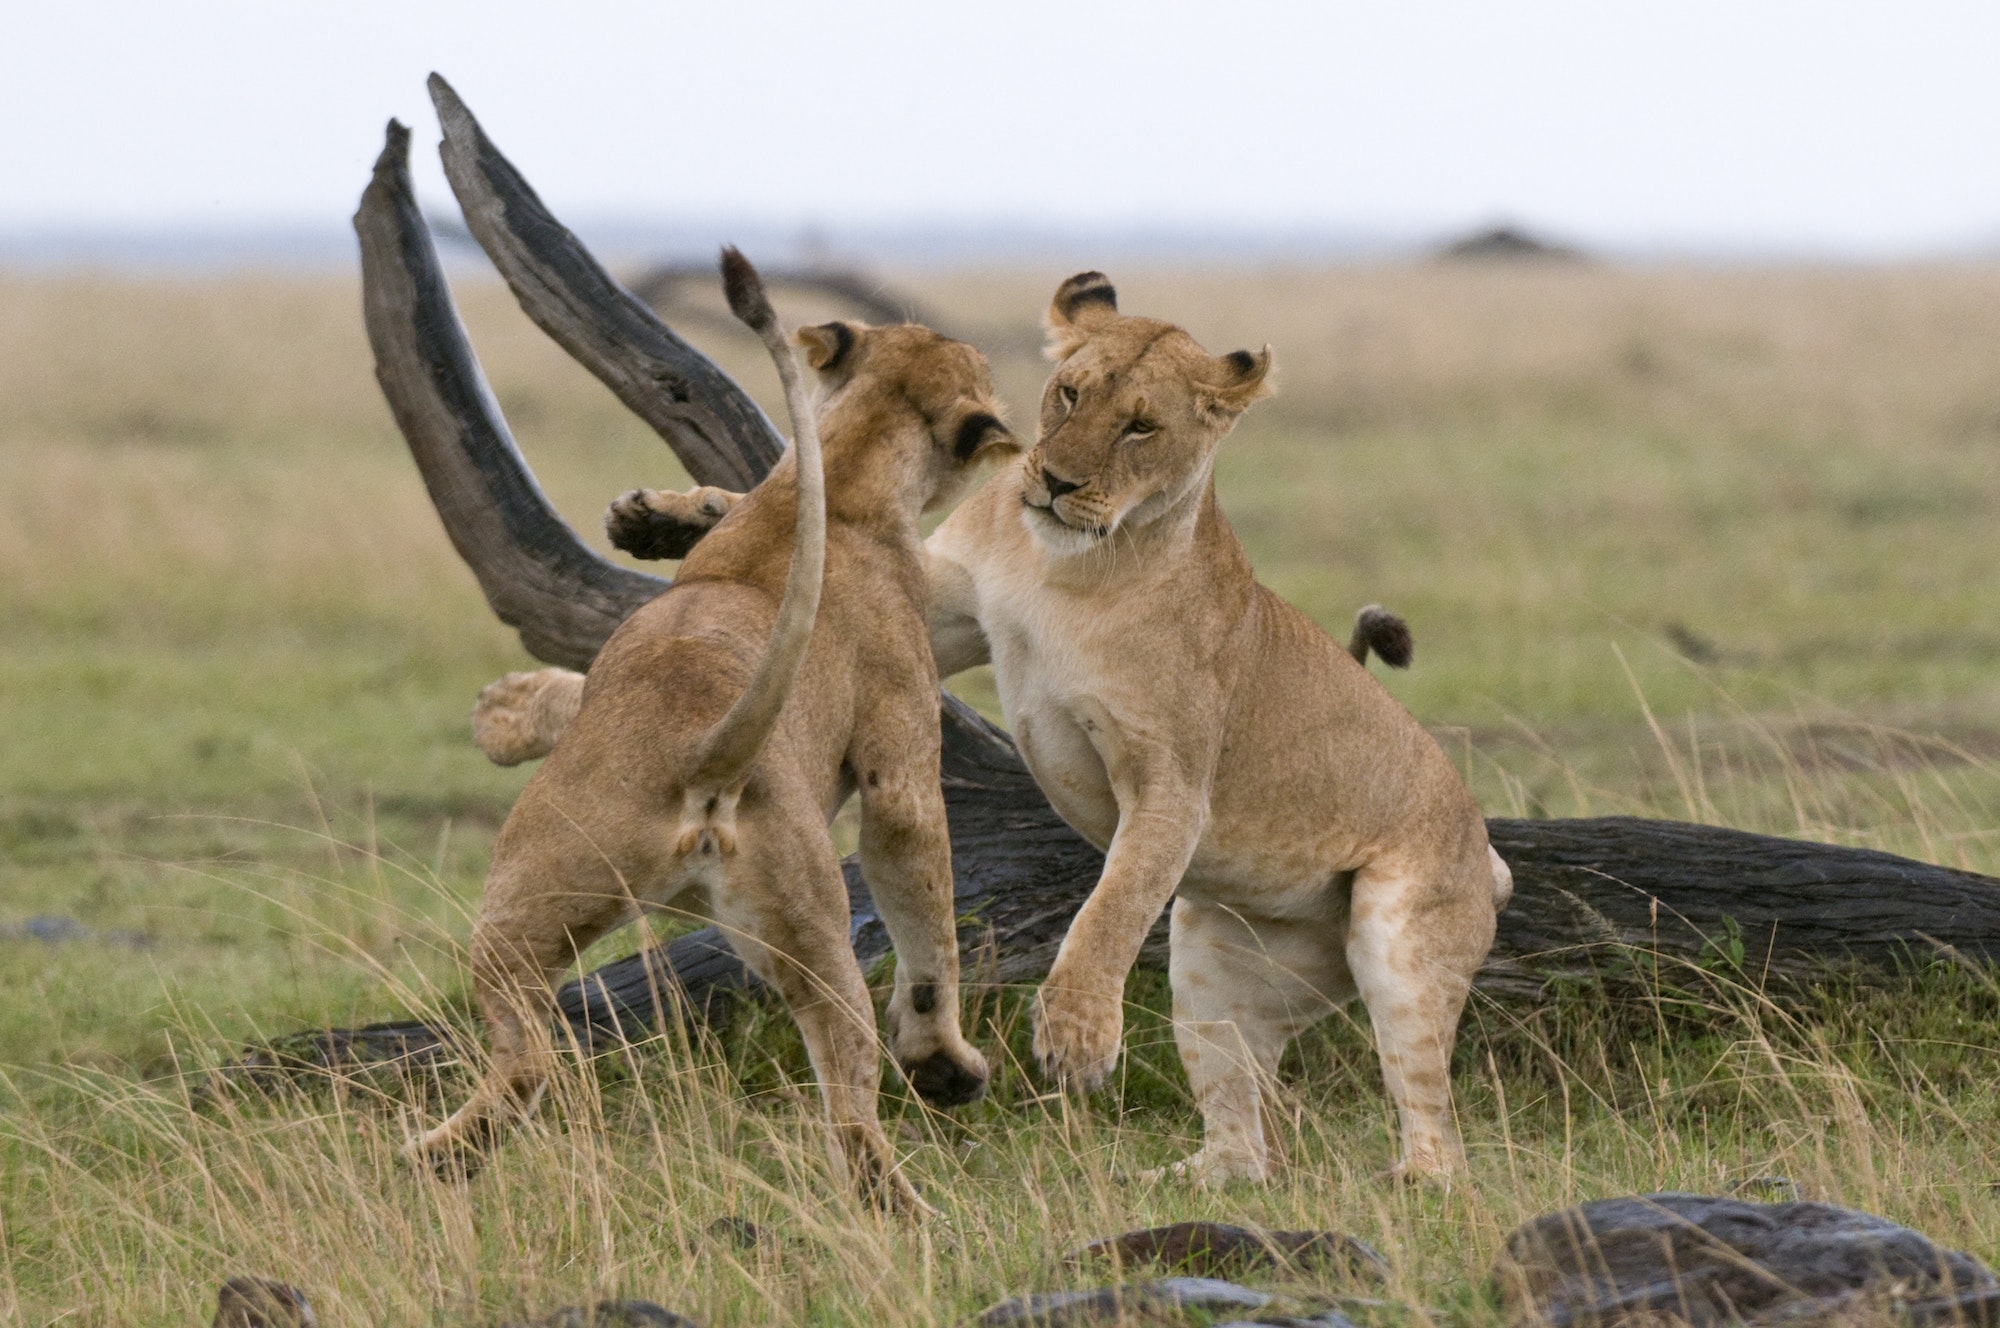 Lionesses playing (Panthera leo), Masai Mara National Reserve, Kenya